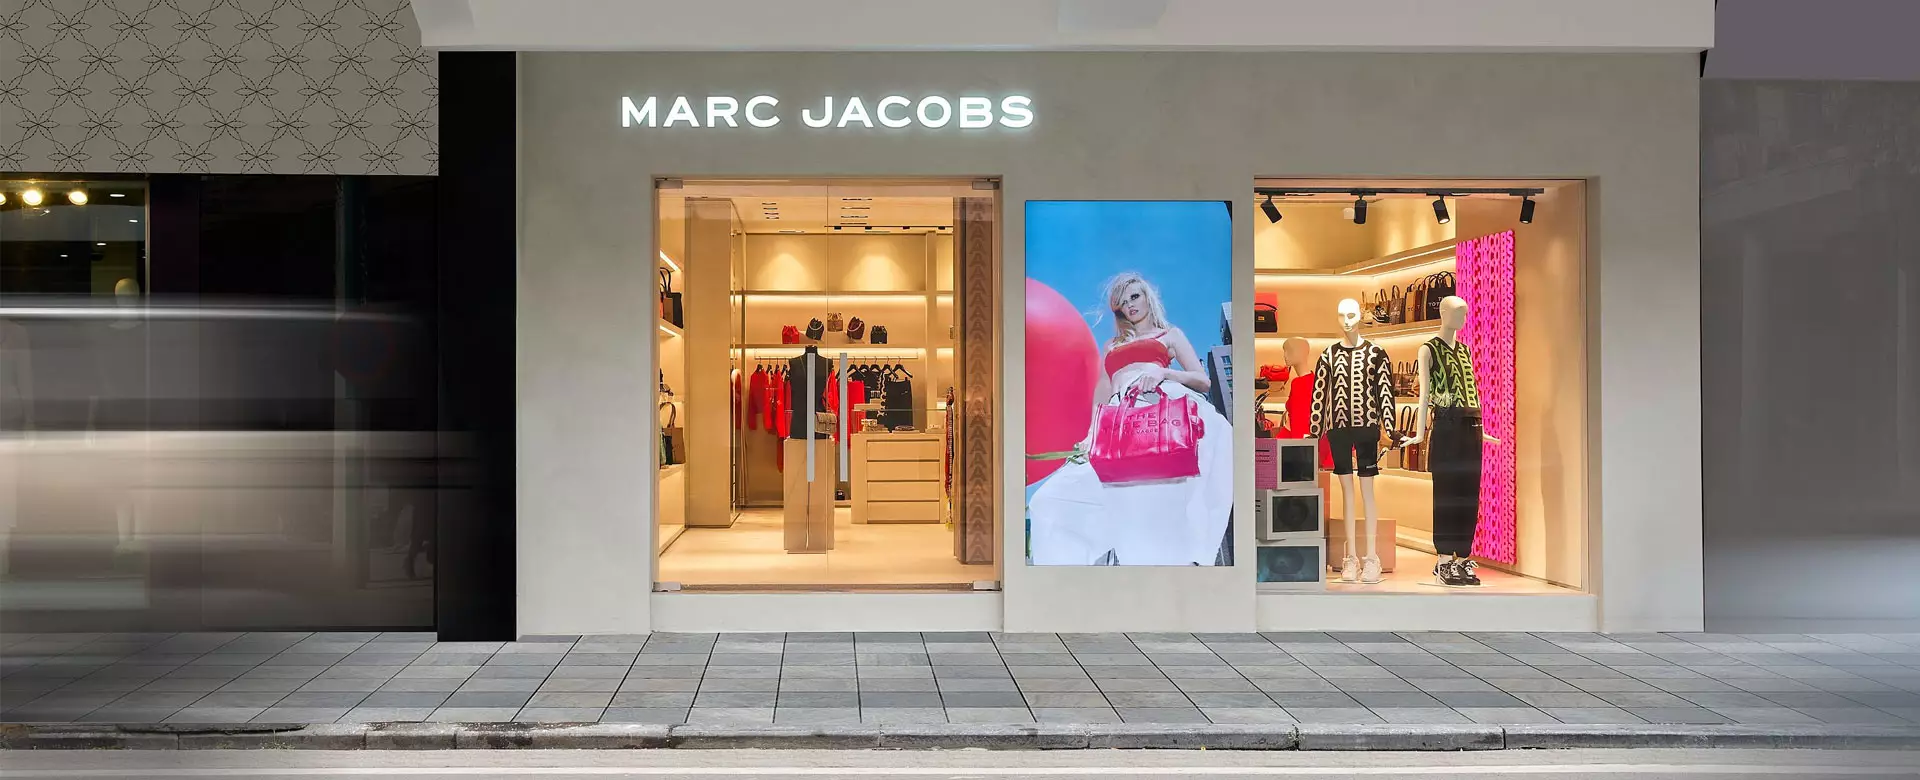 Marc Jacobs 1